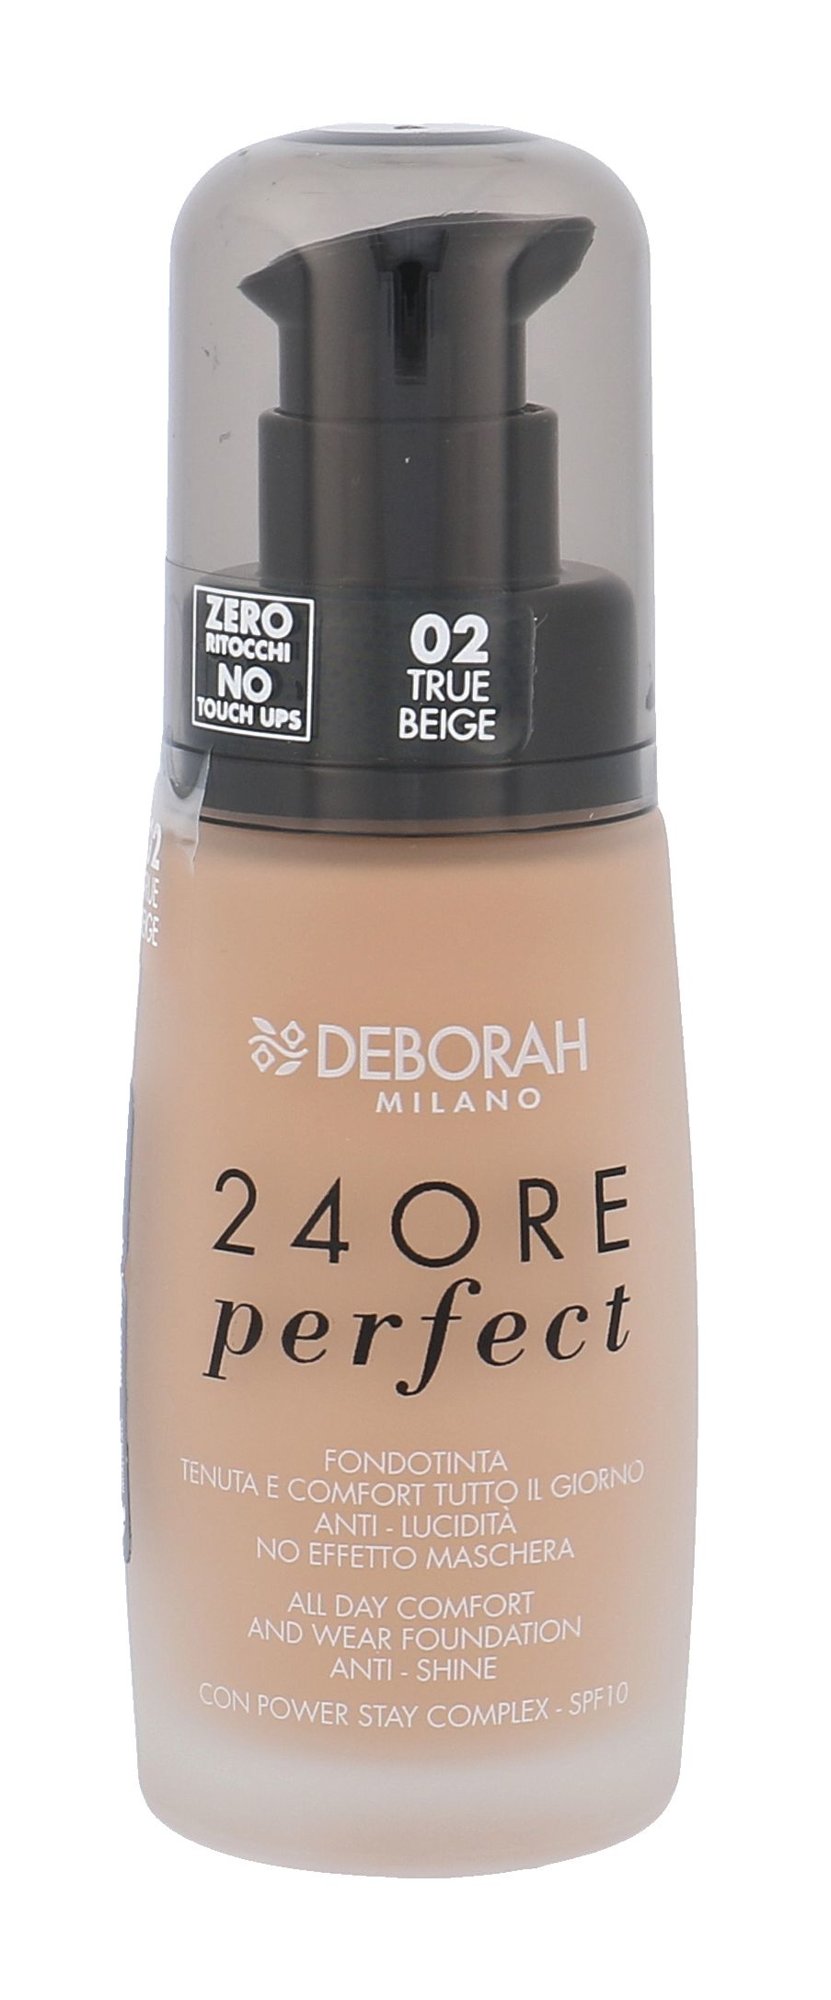 Deborah Milano 24Ore Perfect Foundation SPF10